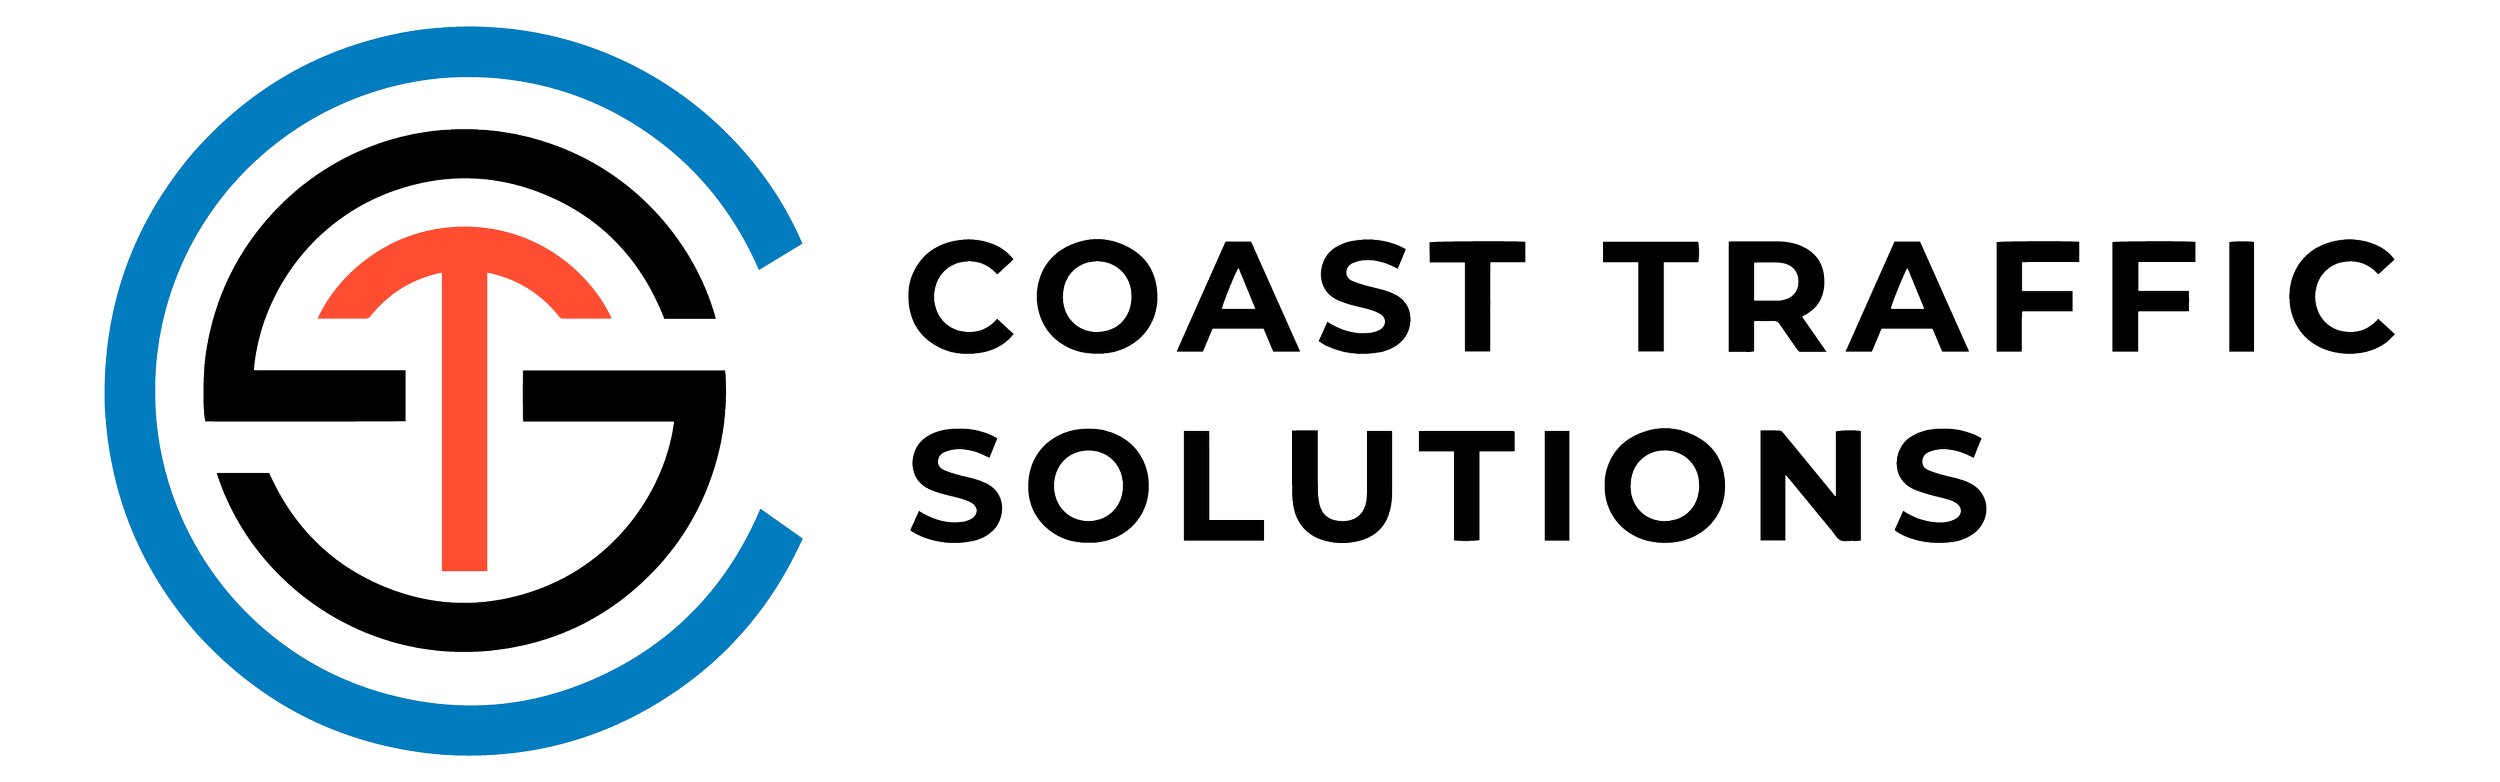 Coast Traffic Solutions